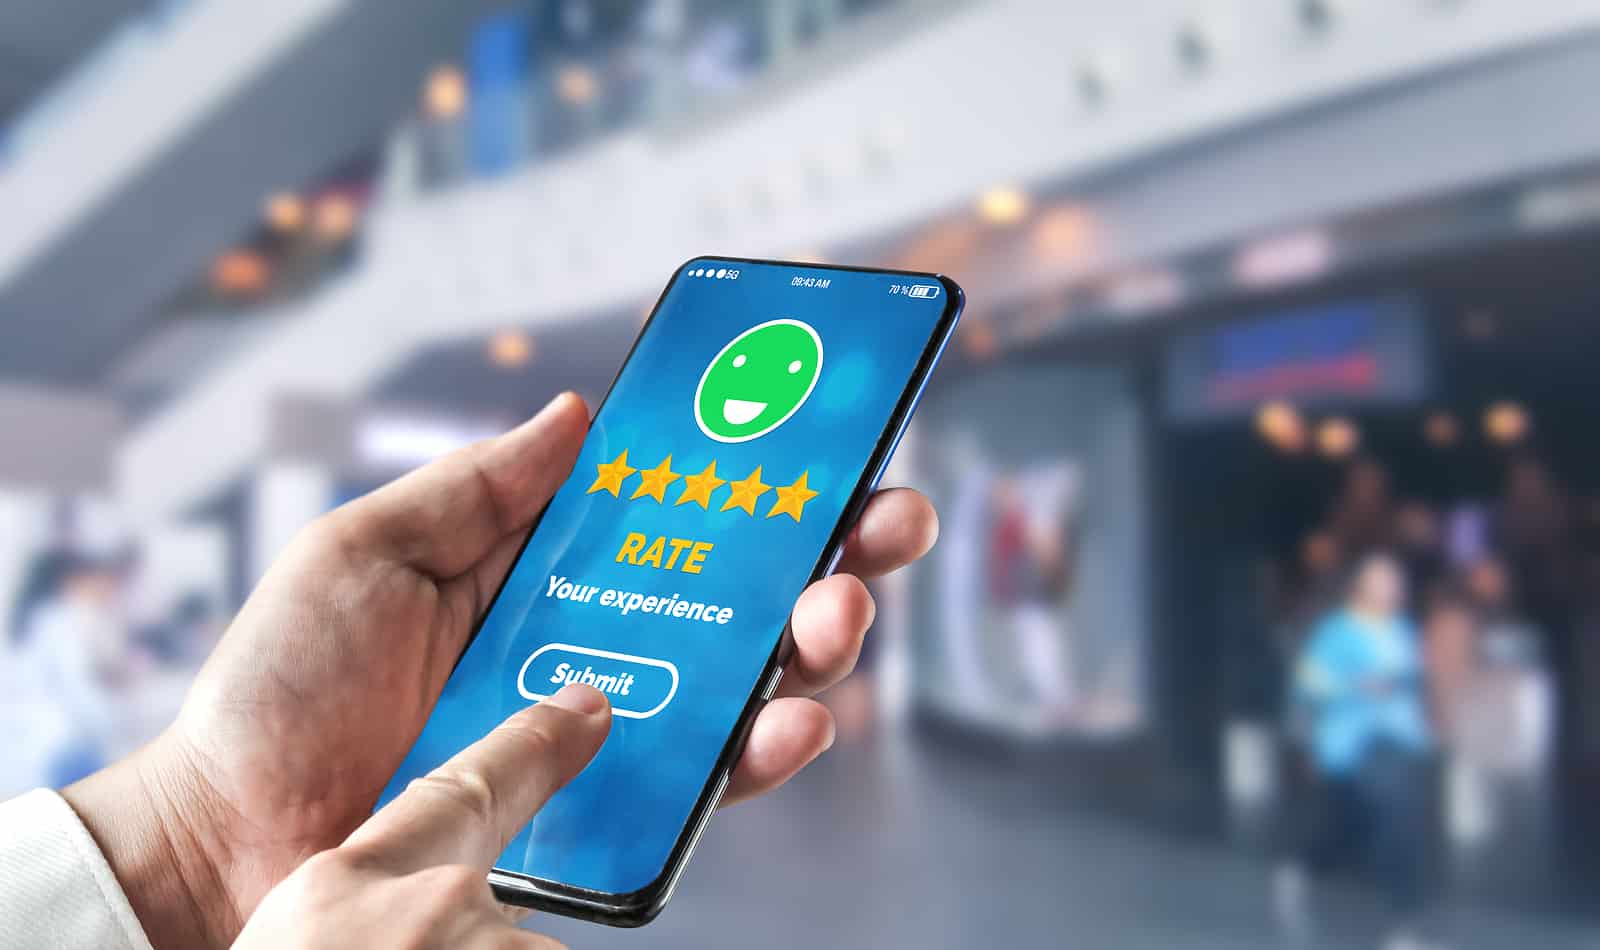 Customer review satisfaction feedback survey concept